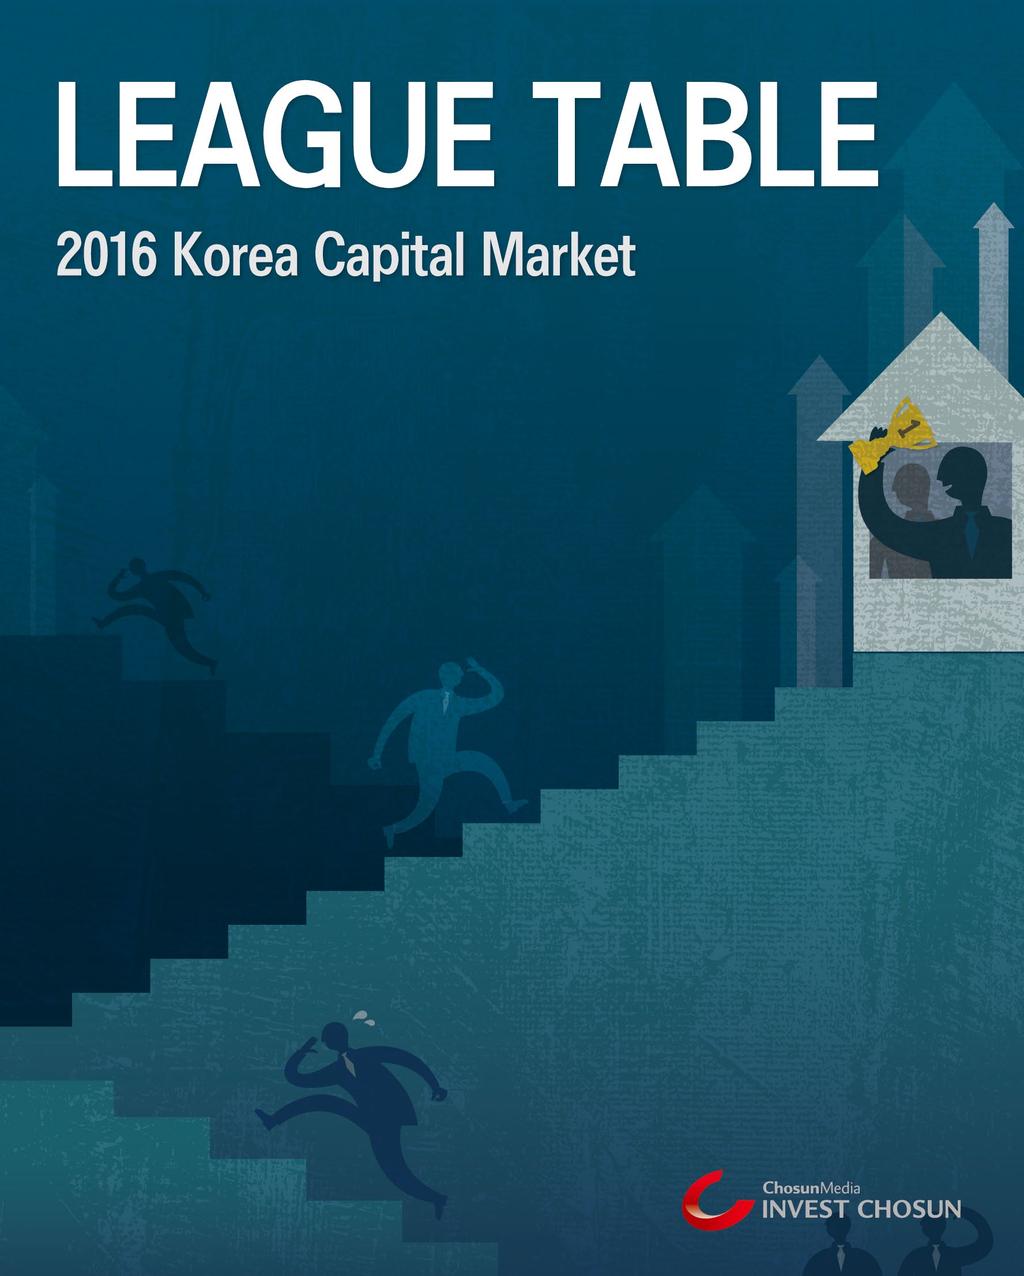 DCM League Table DCM League Table (ECM1/ 종합순위 ) 한국證 NH 證 ' 용호상박 ' 결국한국證이웃었다 이재영기자 leejy@chosun.